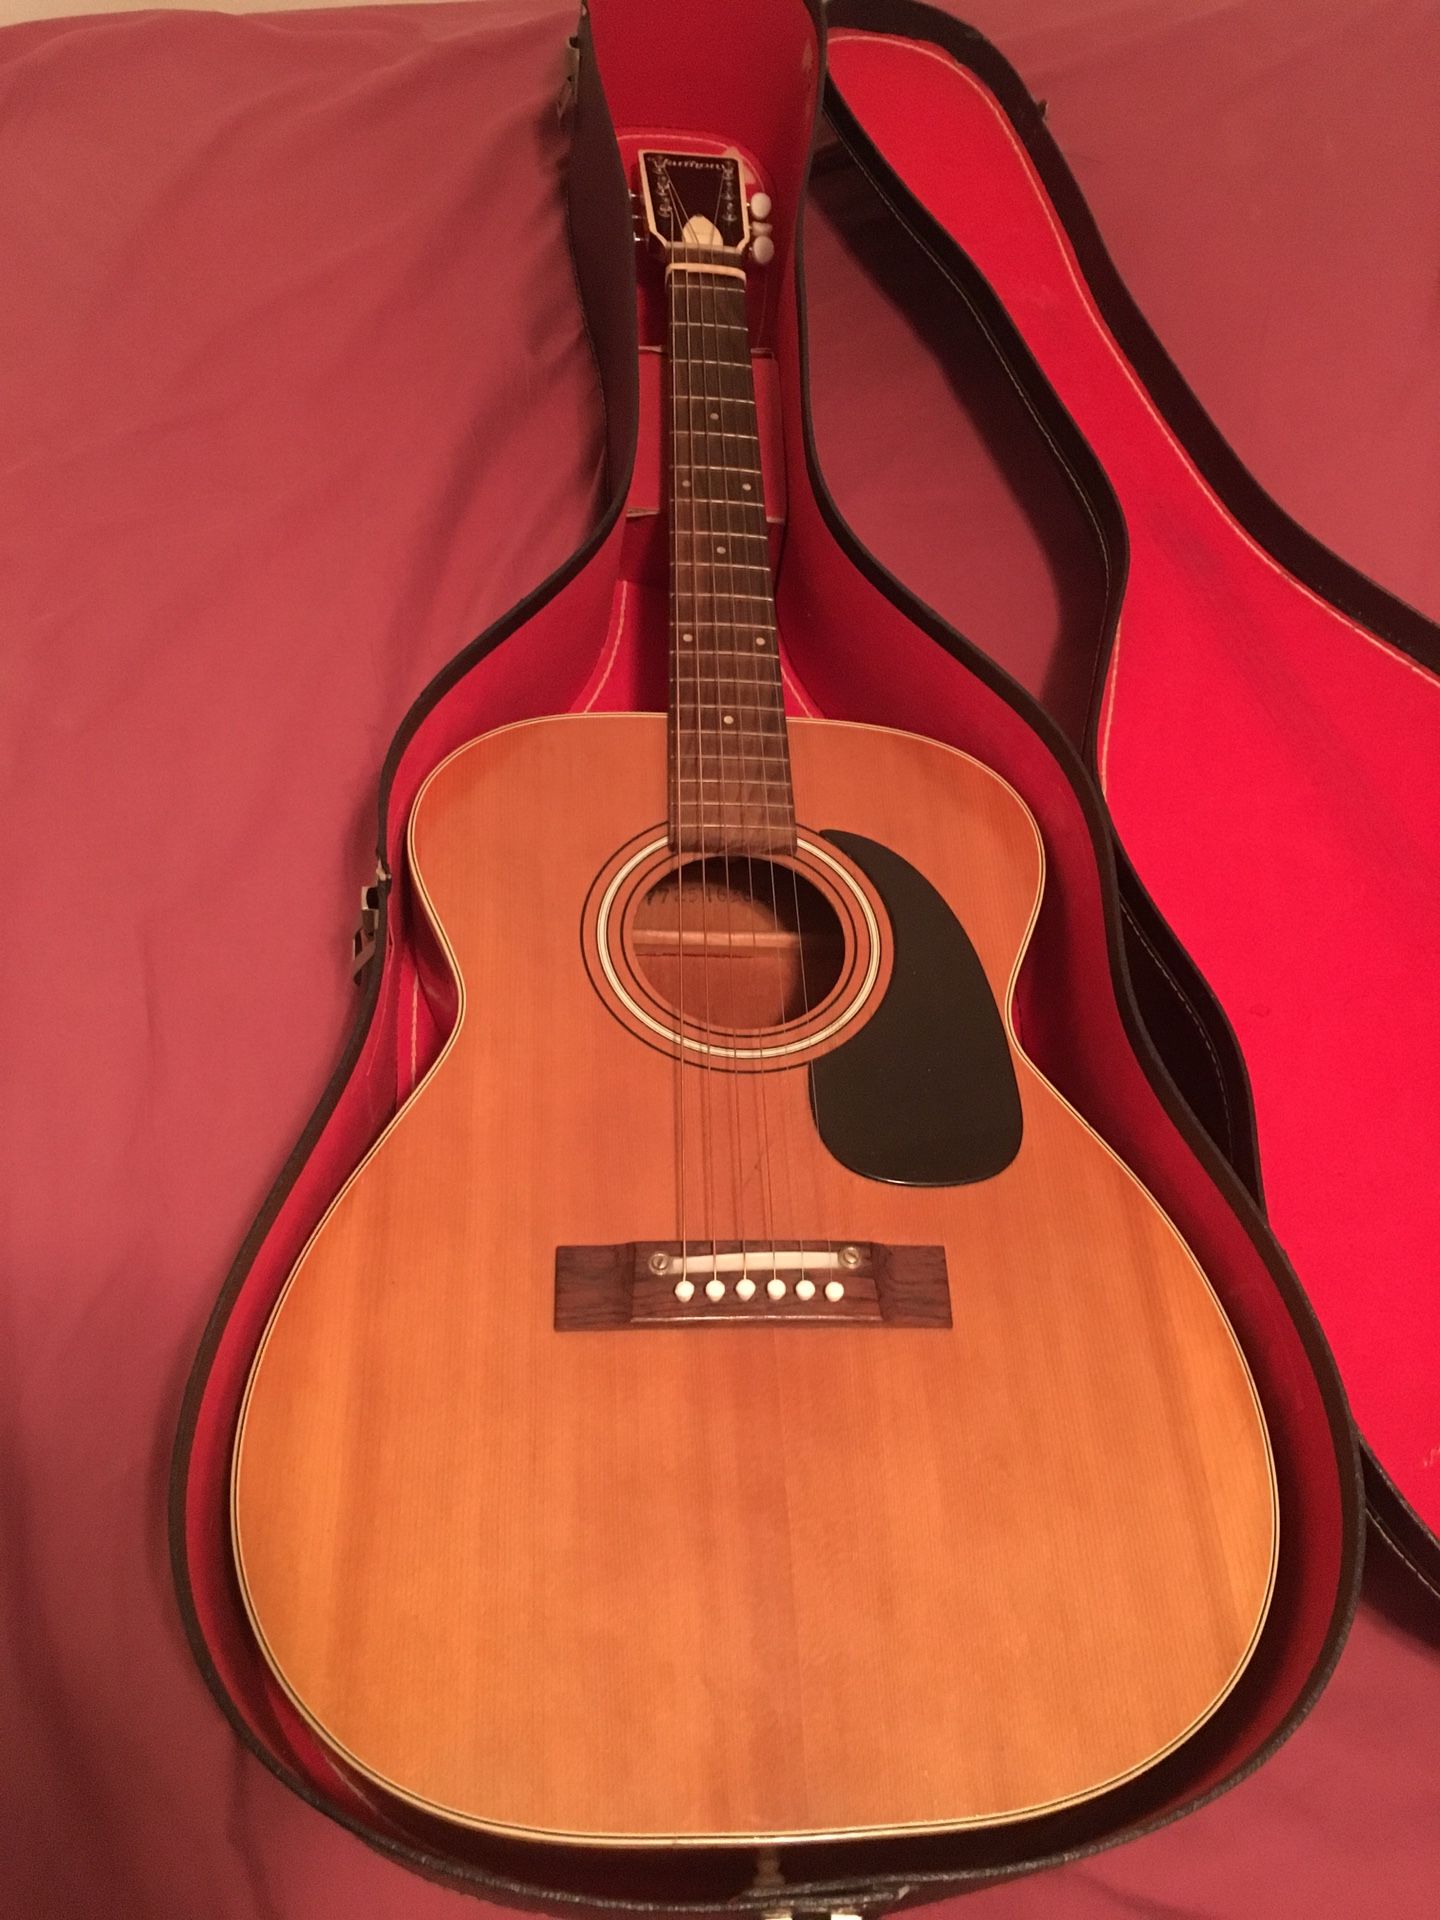 Beautiful 45+ Year Old Guitar